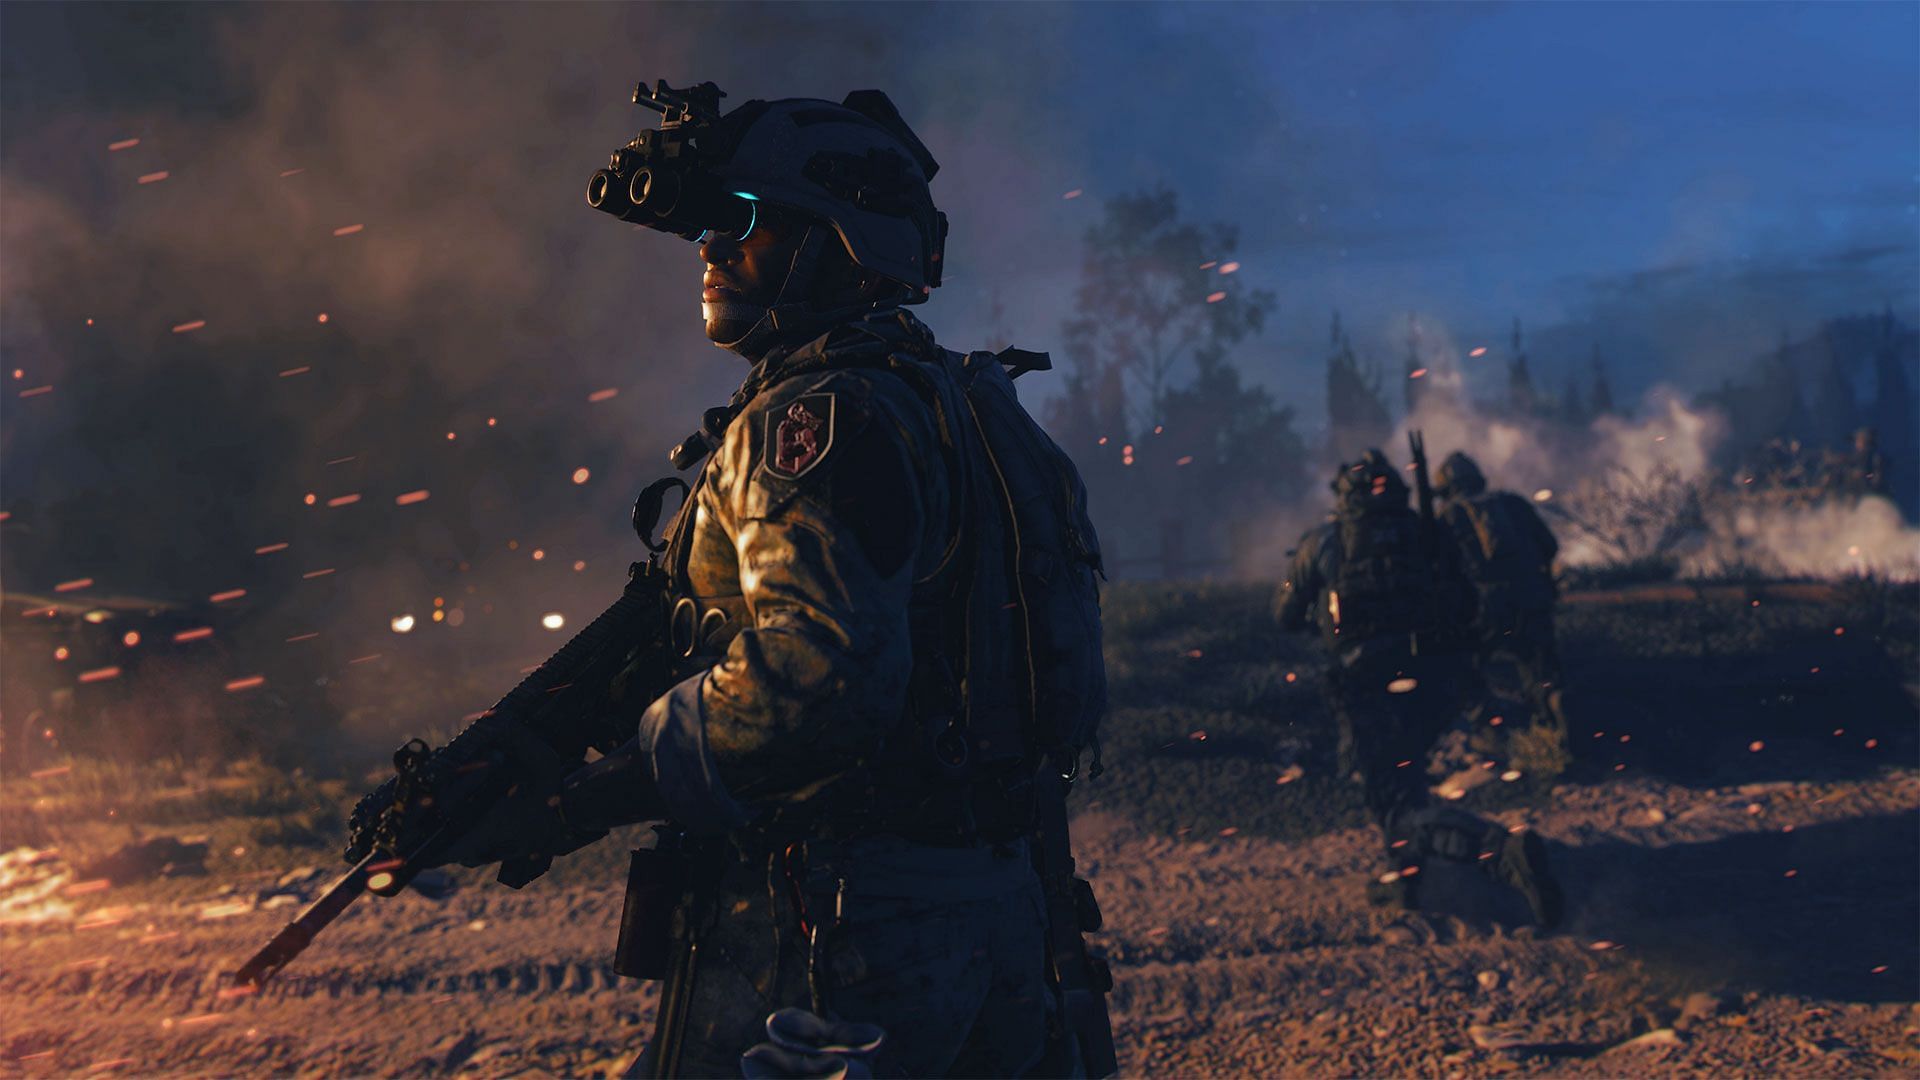 Call of Duty - Advanced Warfare para PS4 - Activision - Outros